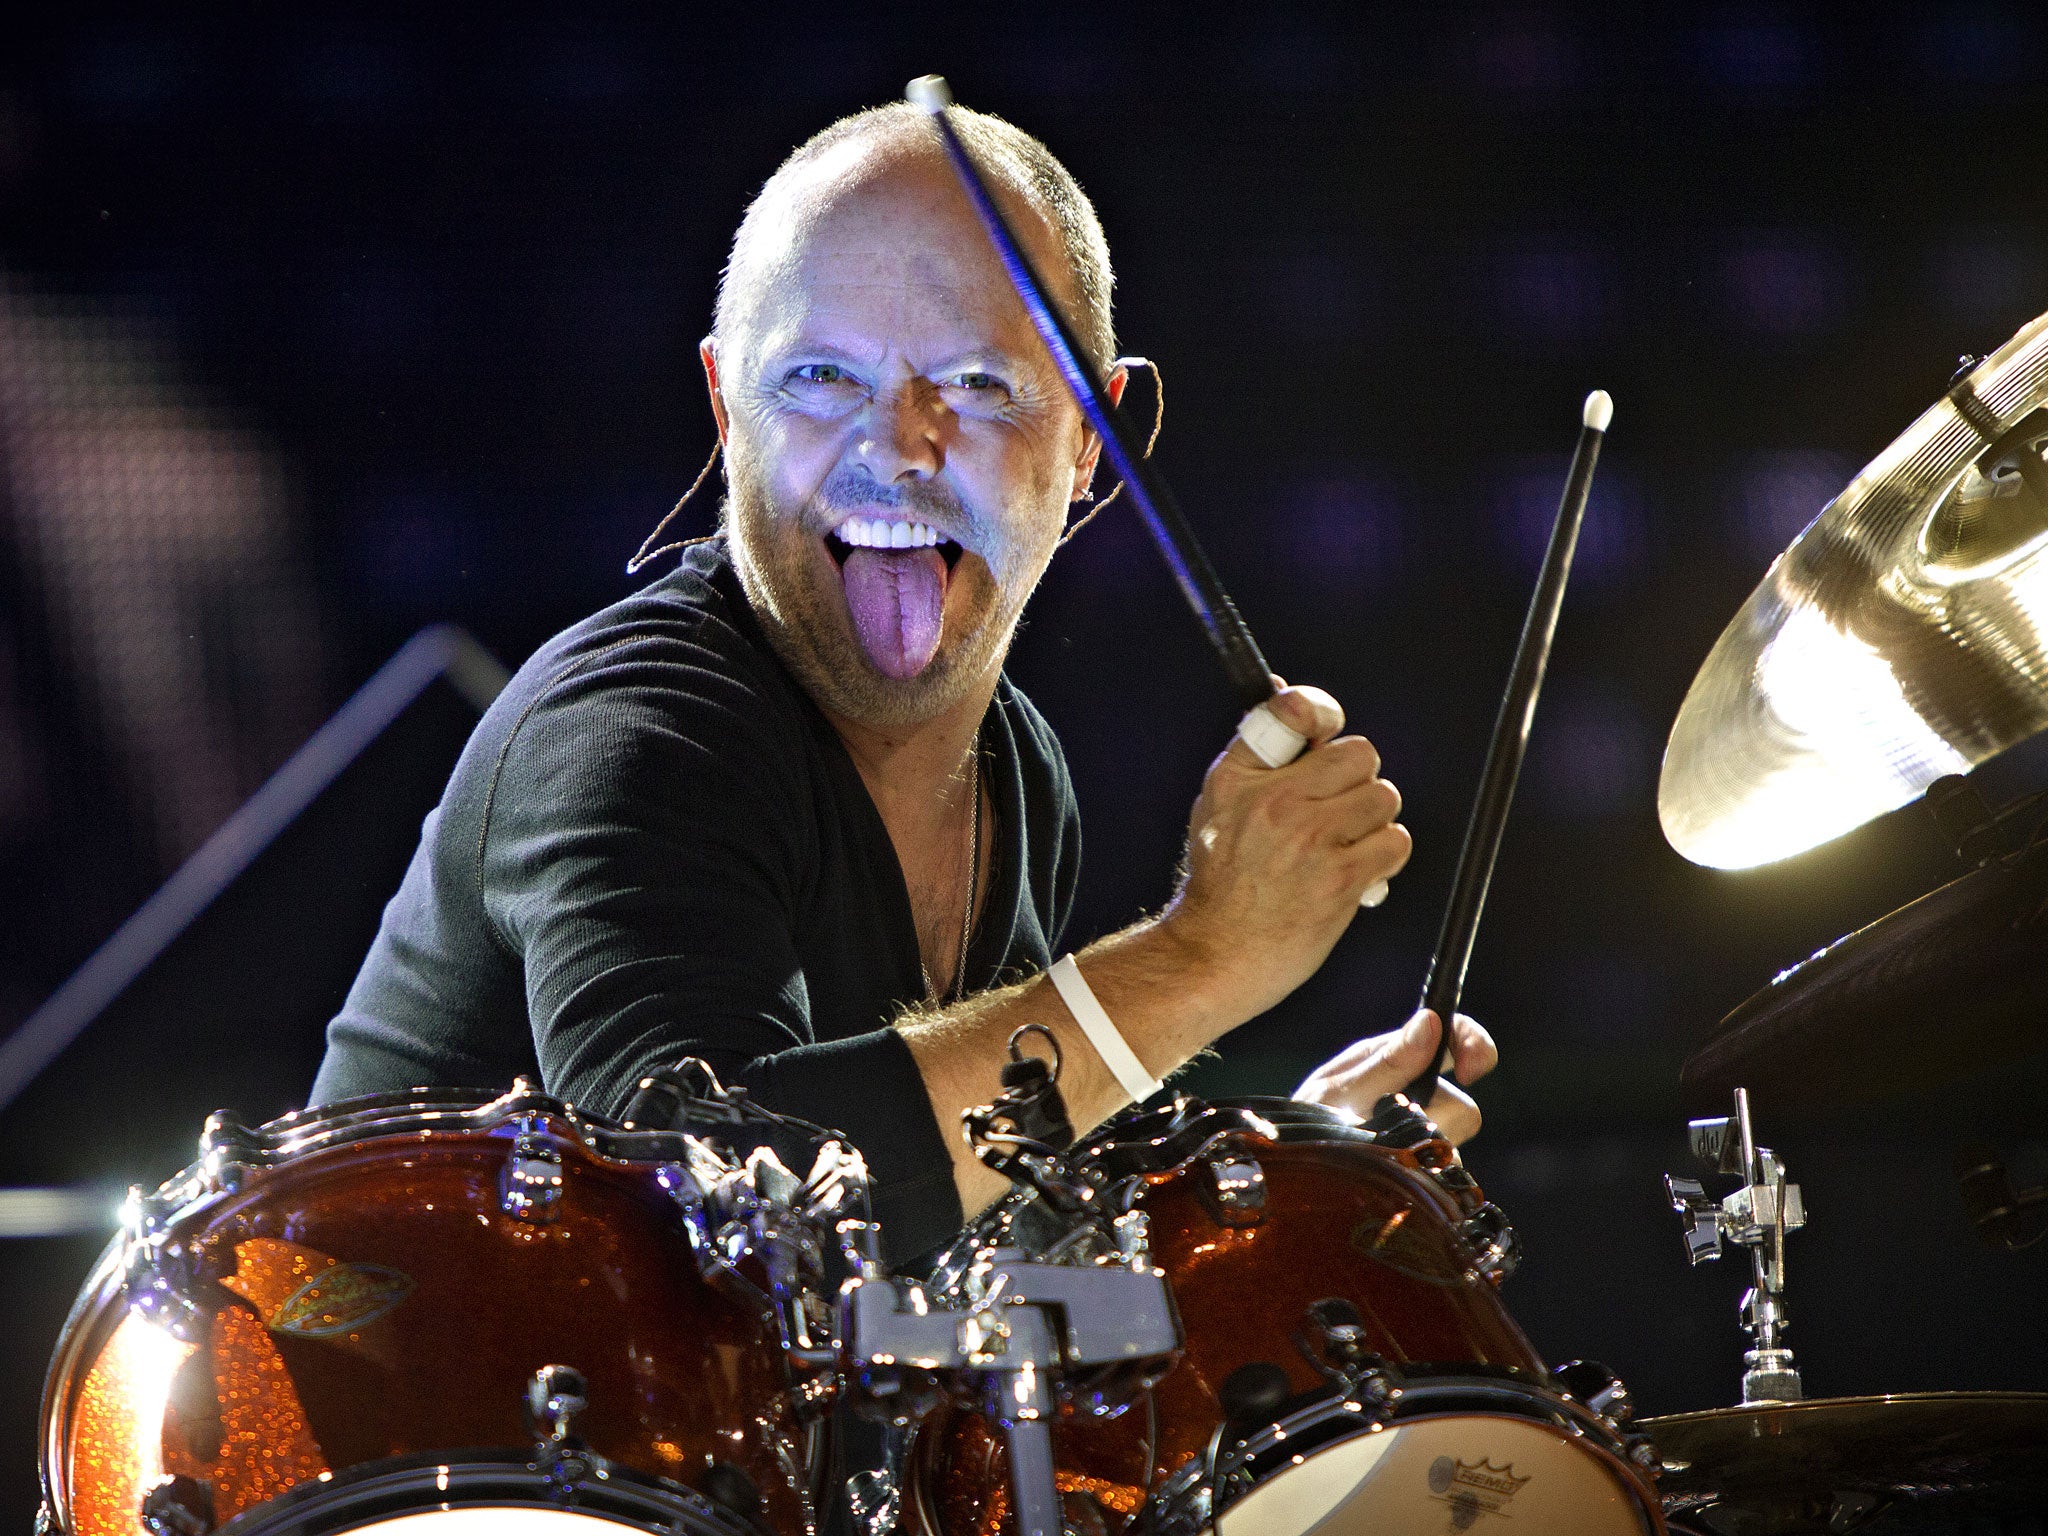 Metallica drummer Lars Ulrich